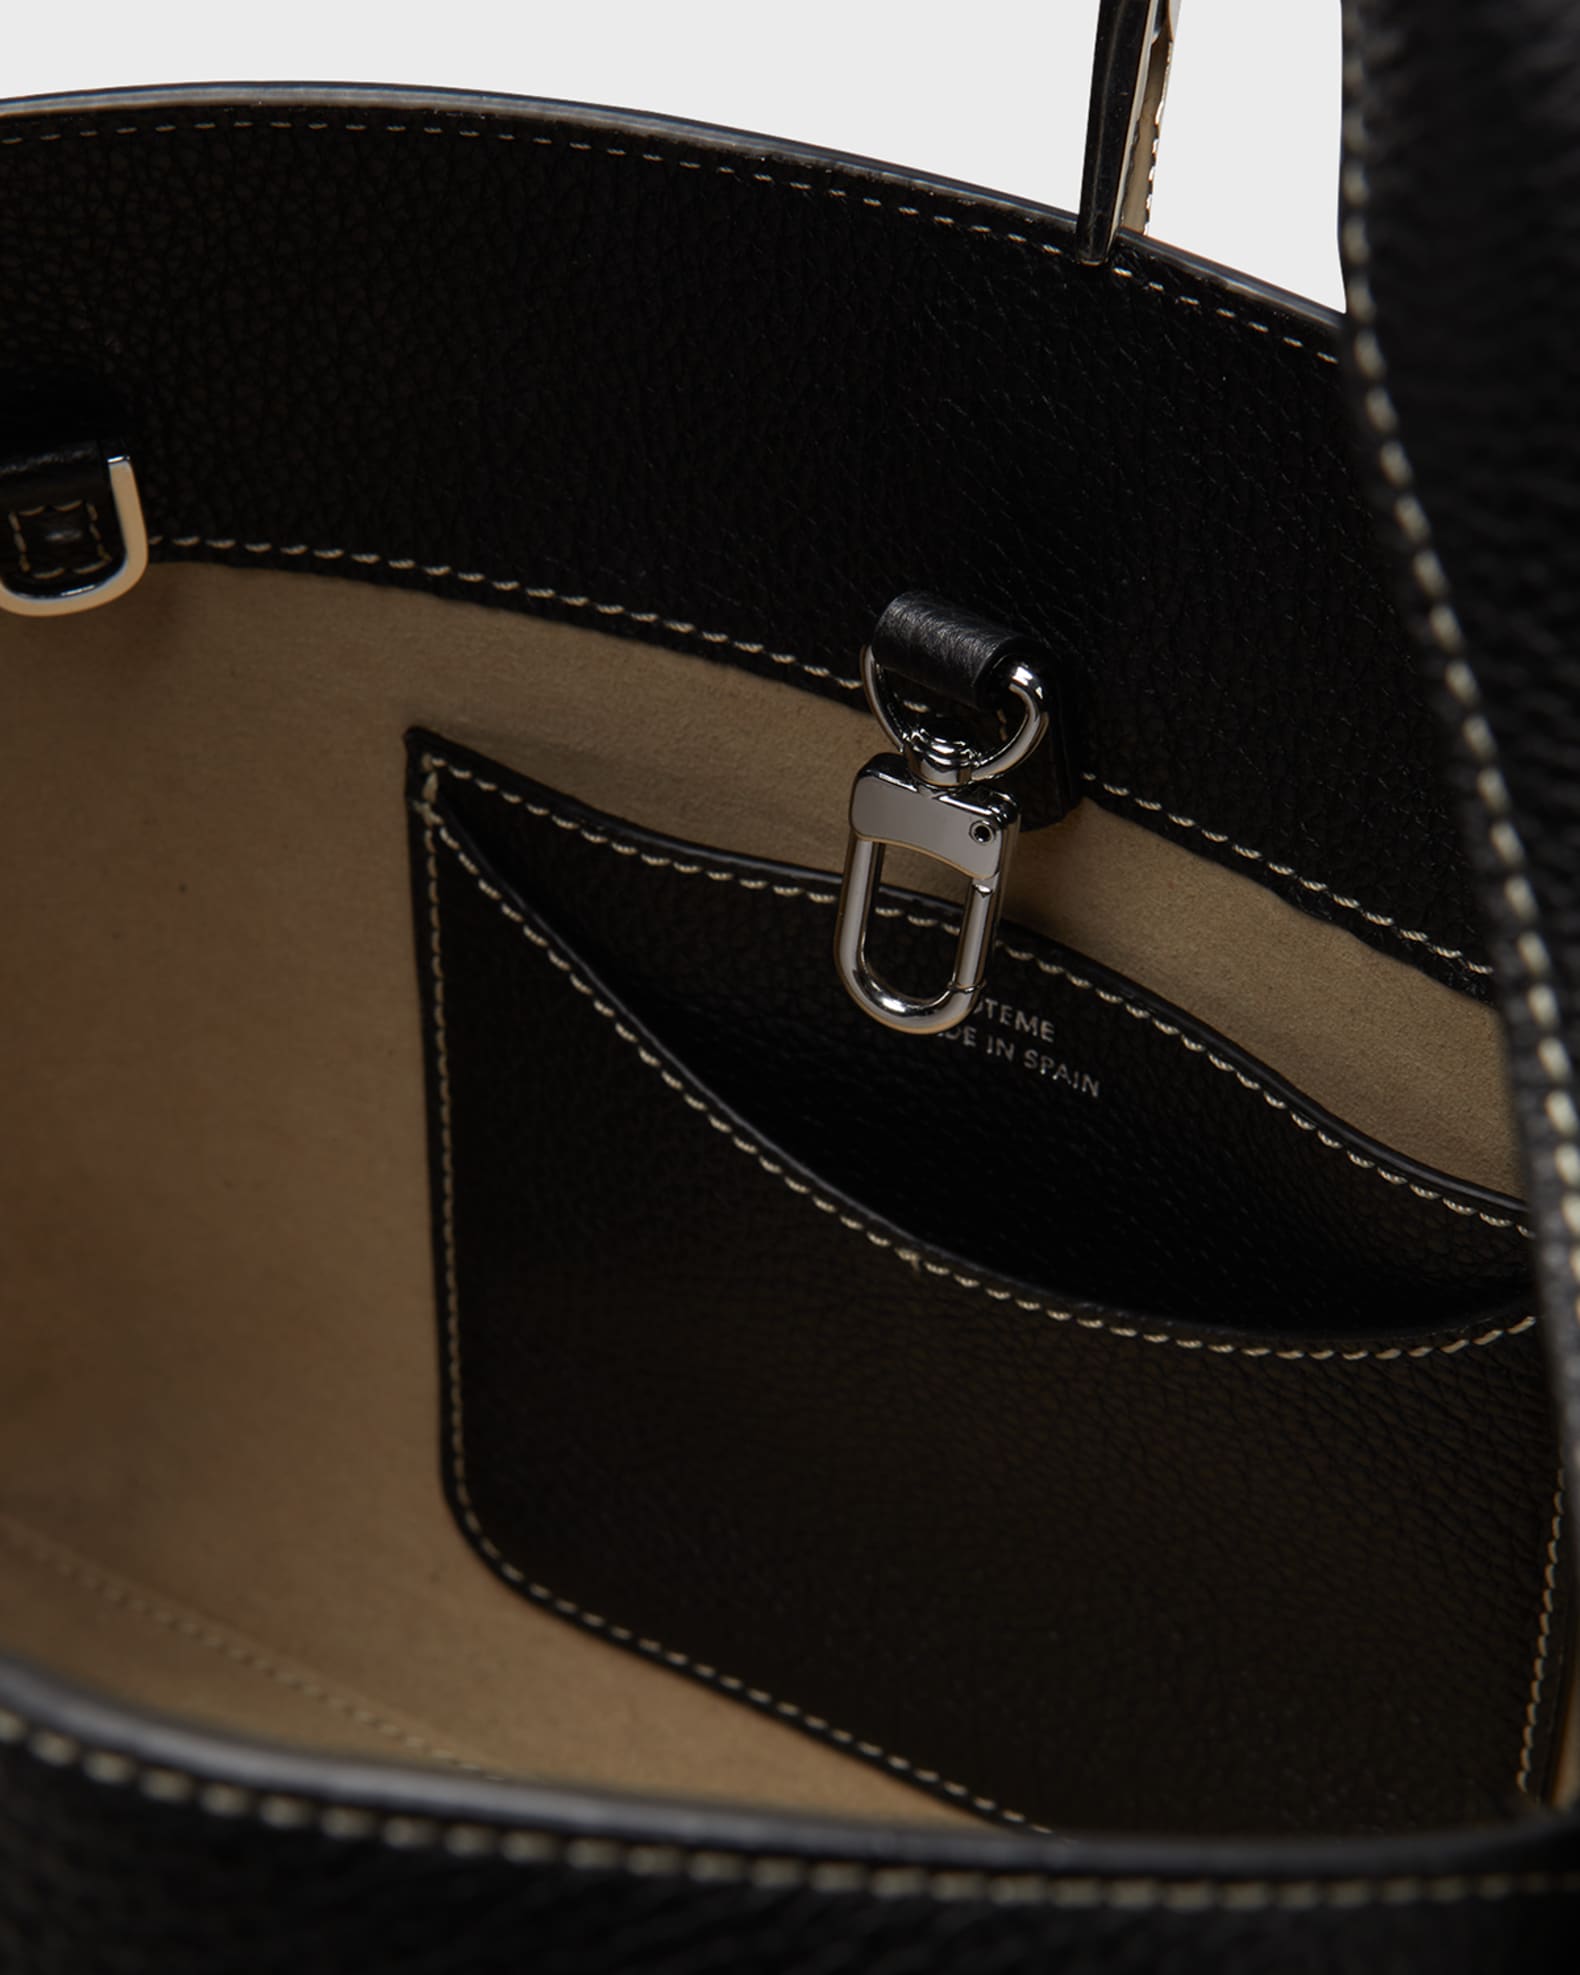 Toteme Bucket Bag in Pebble Grain Leather | Neiman Marcus